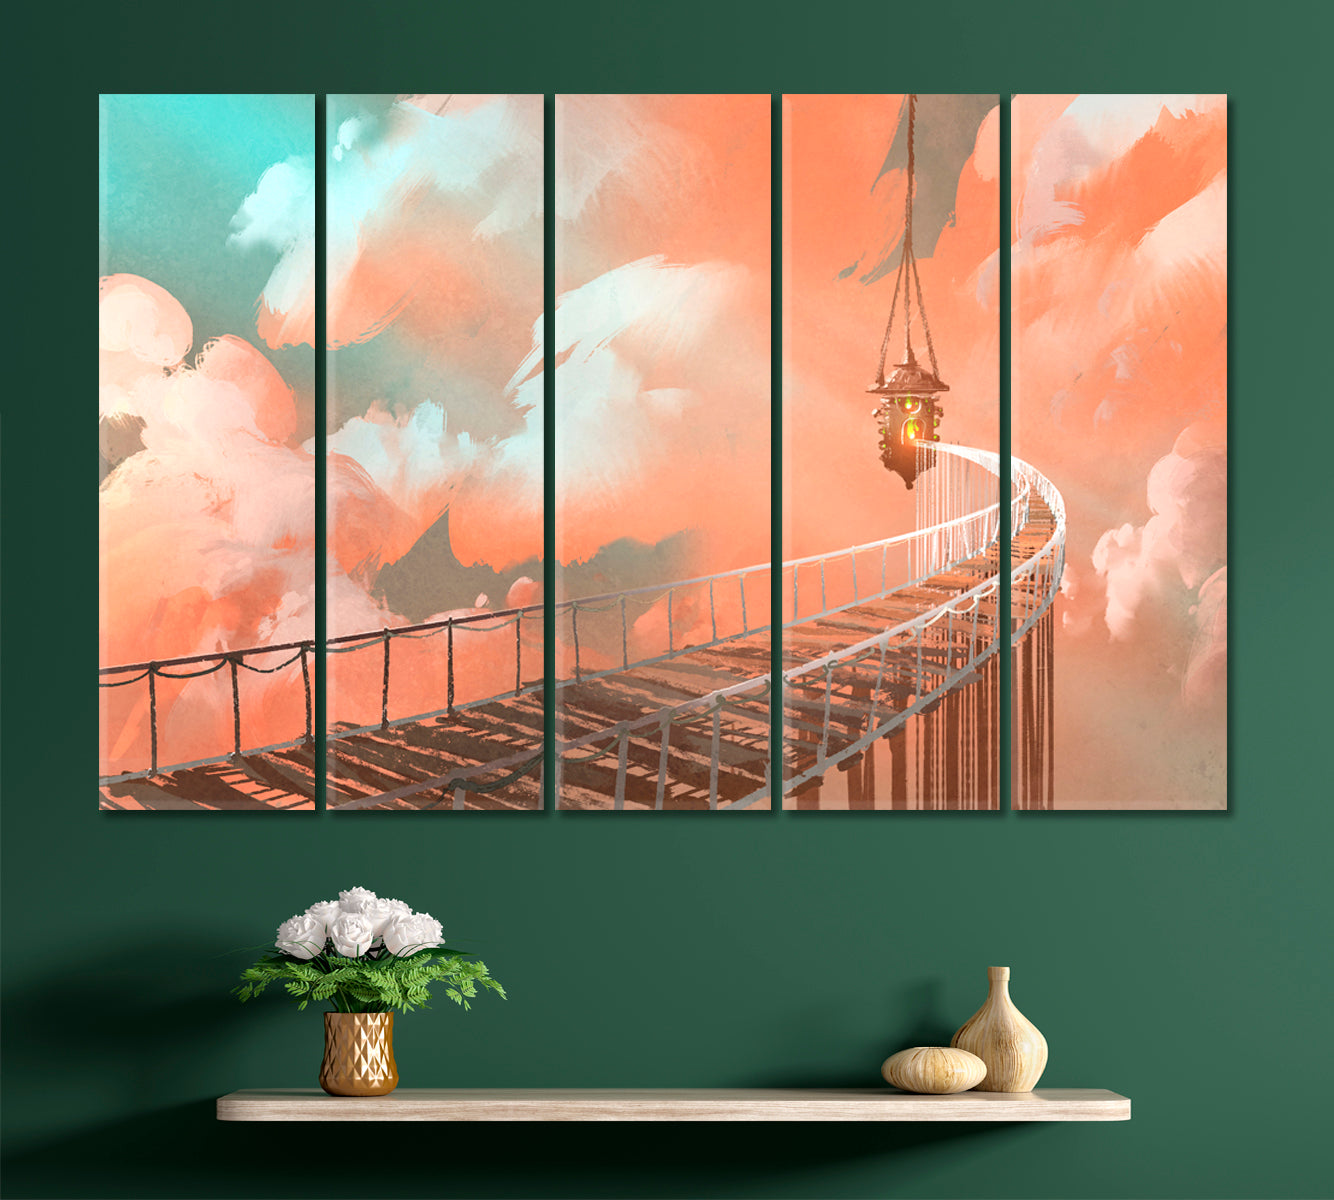 Mystical Surreal Coral Clouds Rope Bridge Hanging Lamp Surreal Fantasy Large Art Print Décor Artesty 5 panels 36" x 24" 